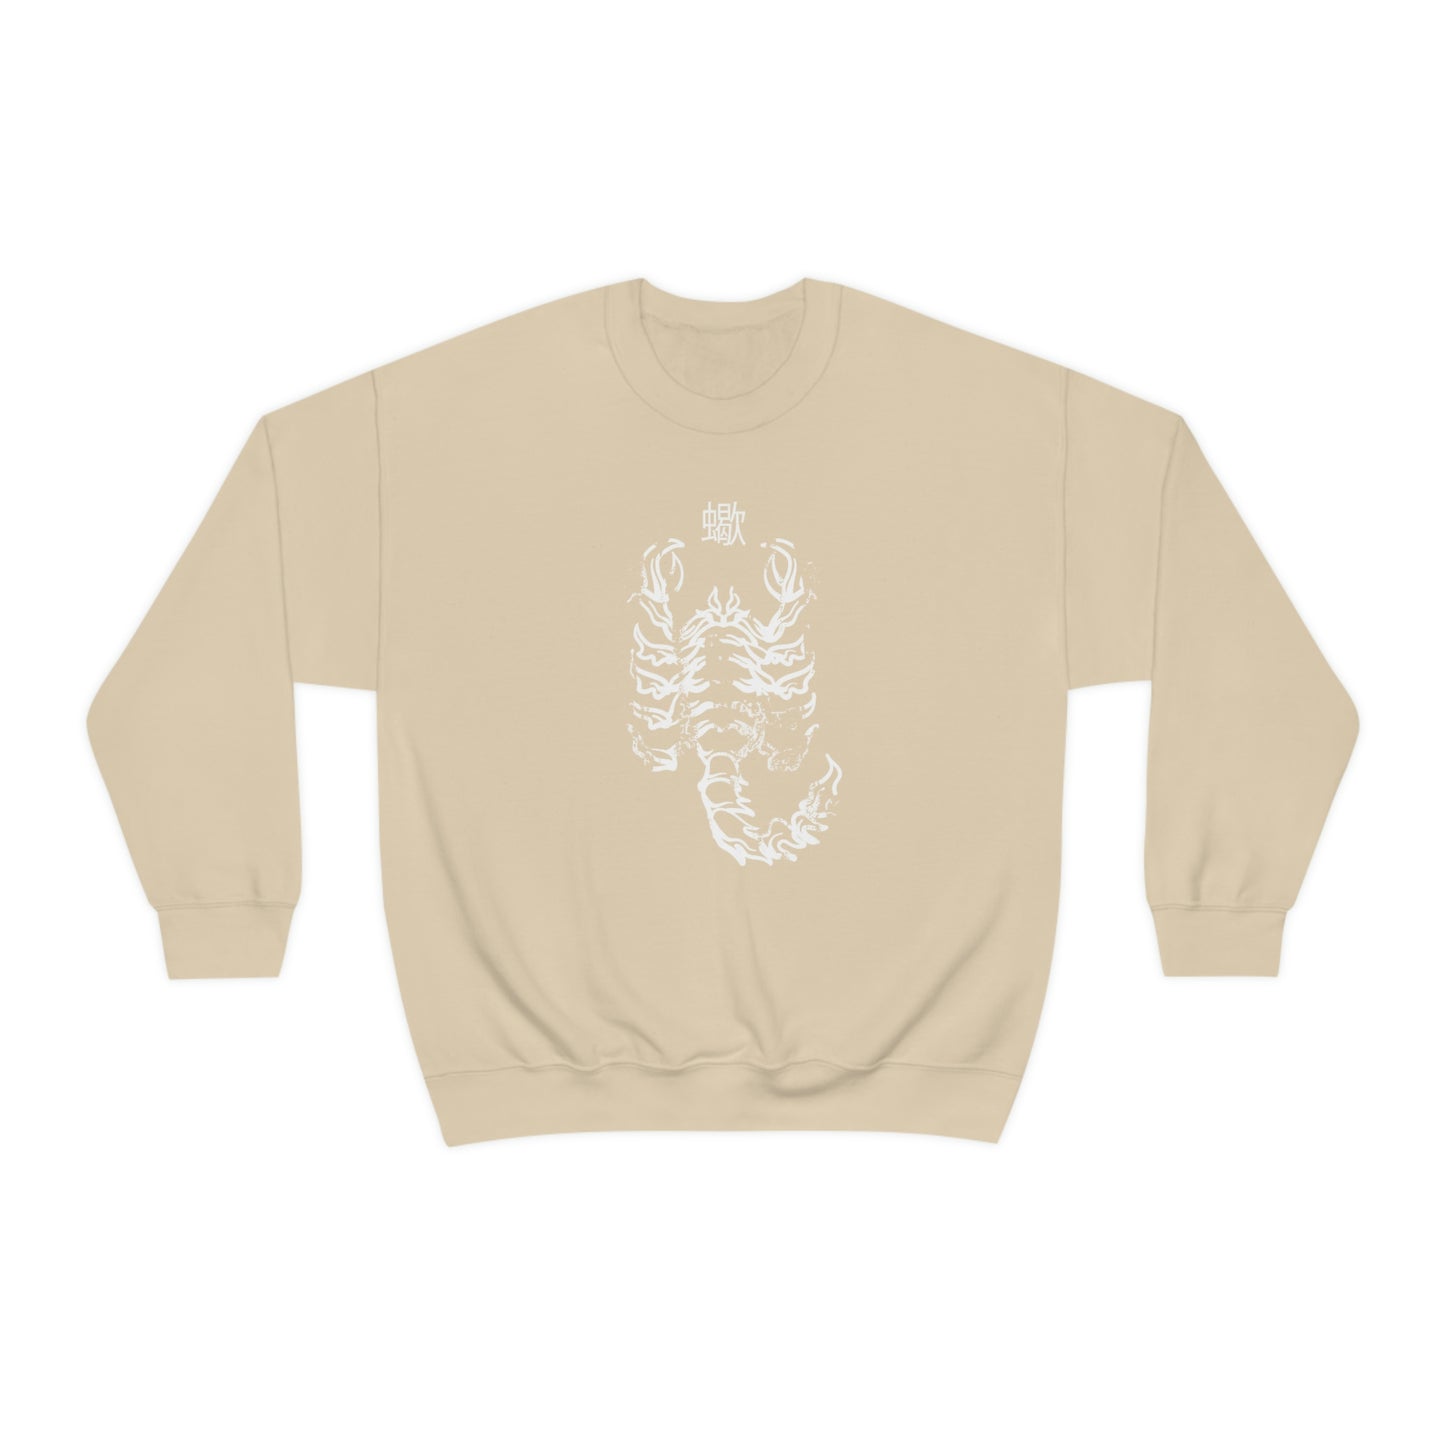 Scorpion sweatshirt Alternative Clothing, Grunge shirt death J-Fashion Top Japan Streetwear Edgy Clothes, Japanese Apparel Urban Tee E-girl